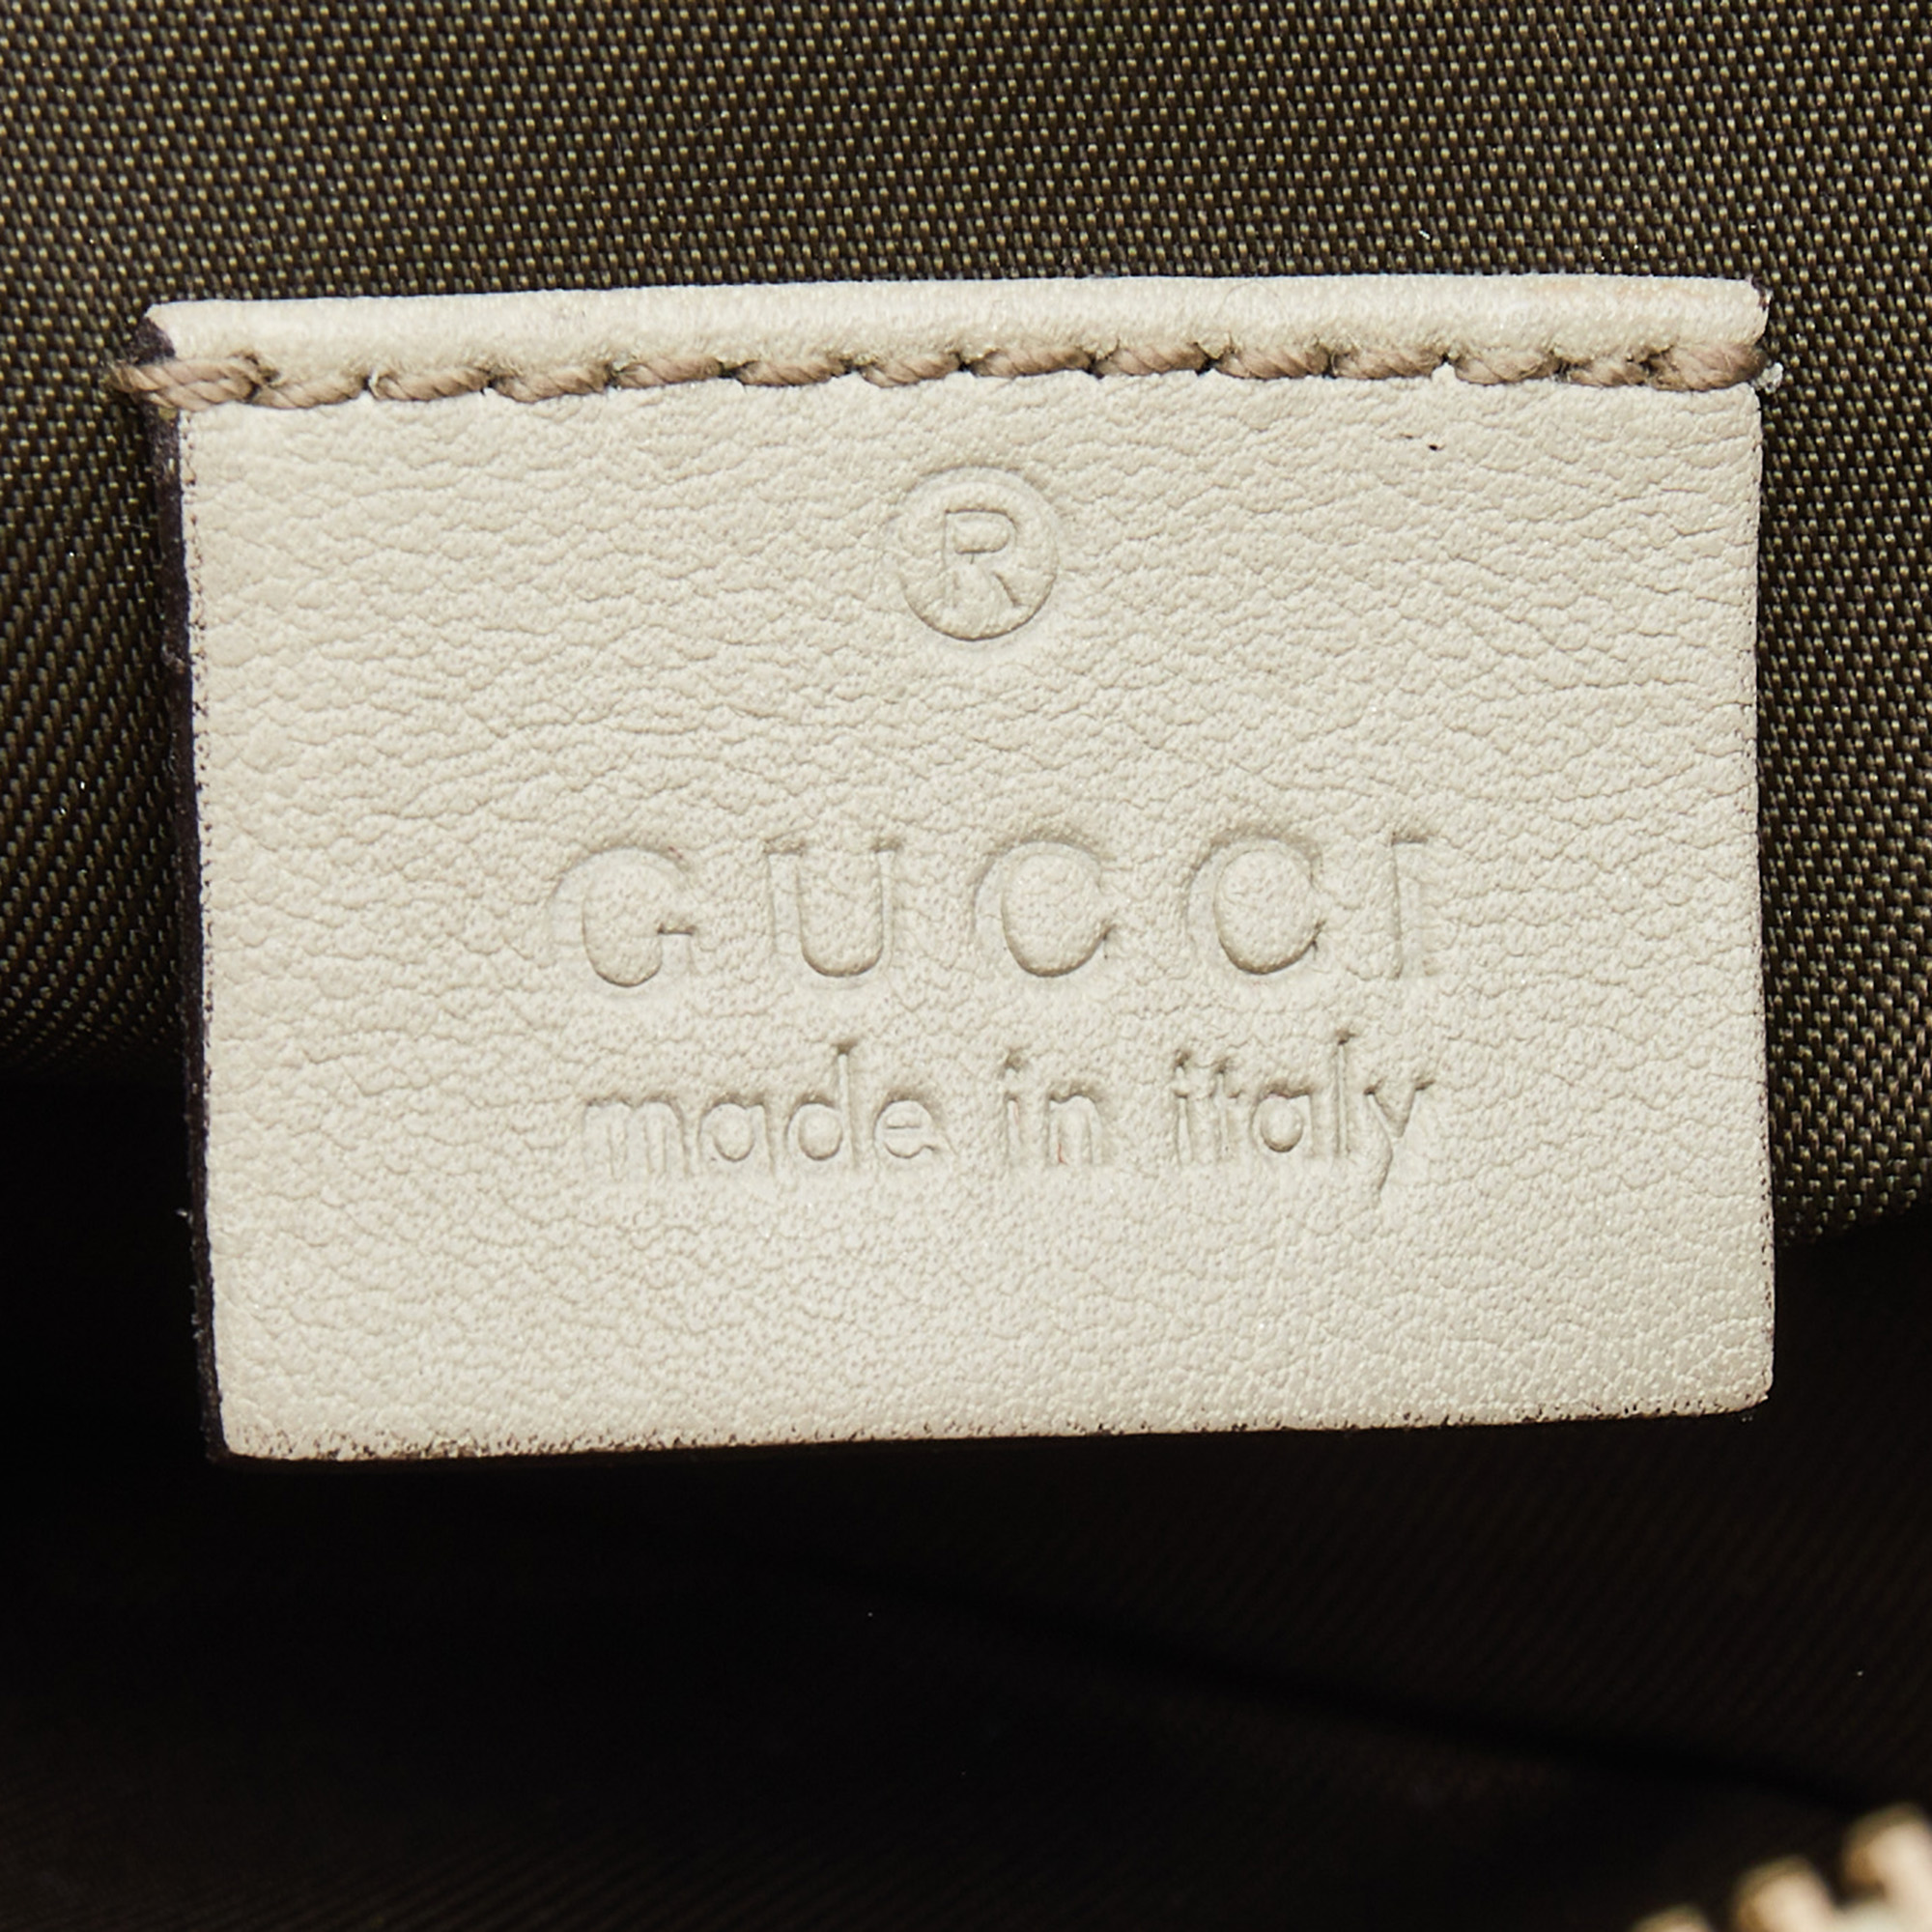 Gucci Off-White Guccissima Leather Interlocking G Wristlet Clutch